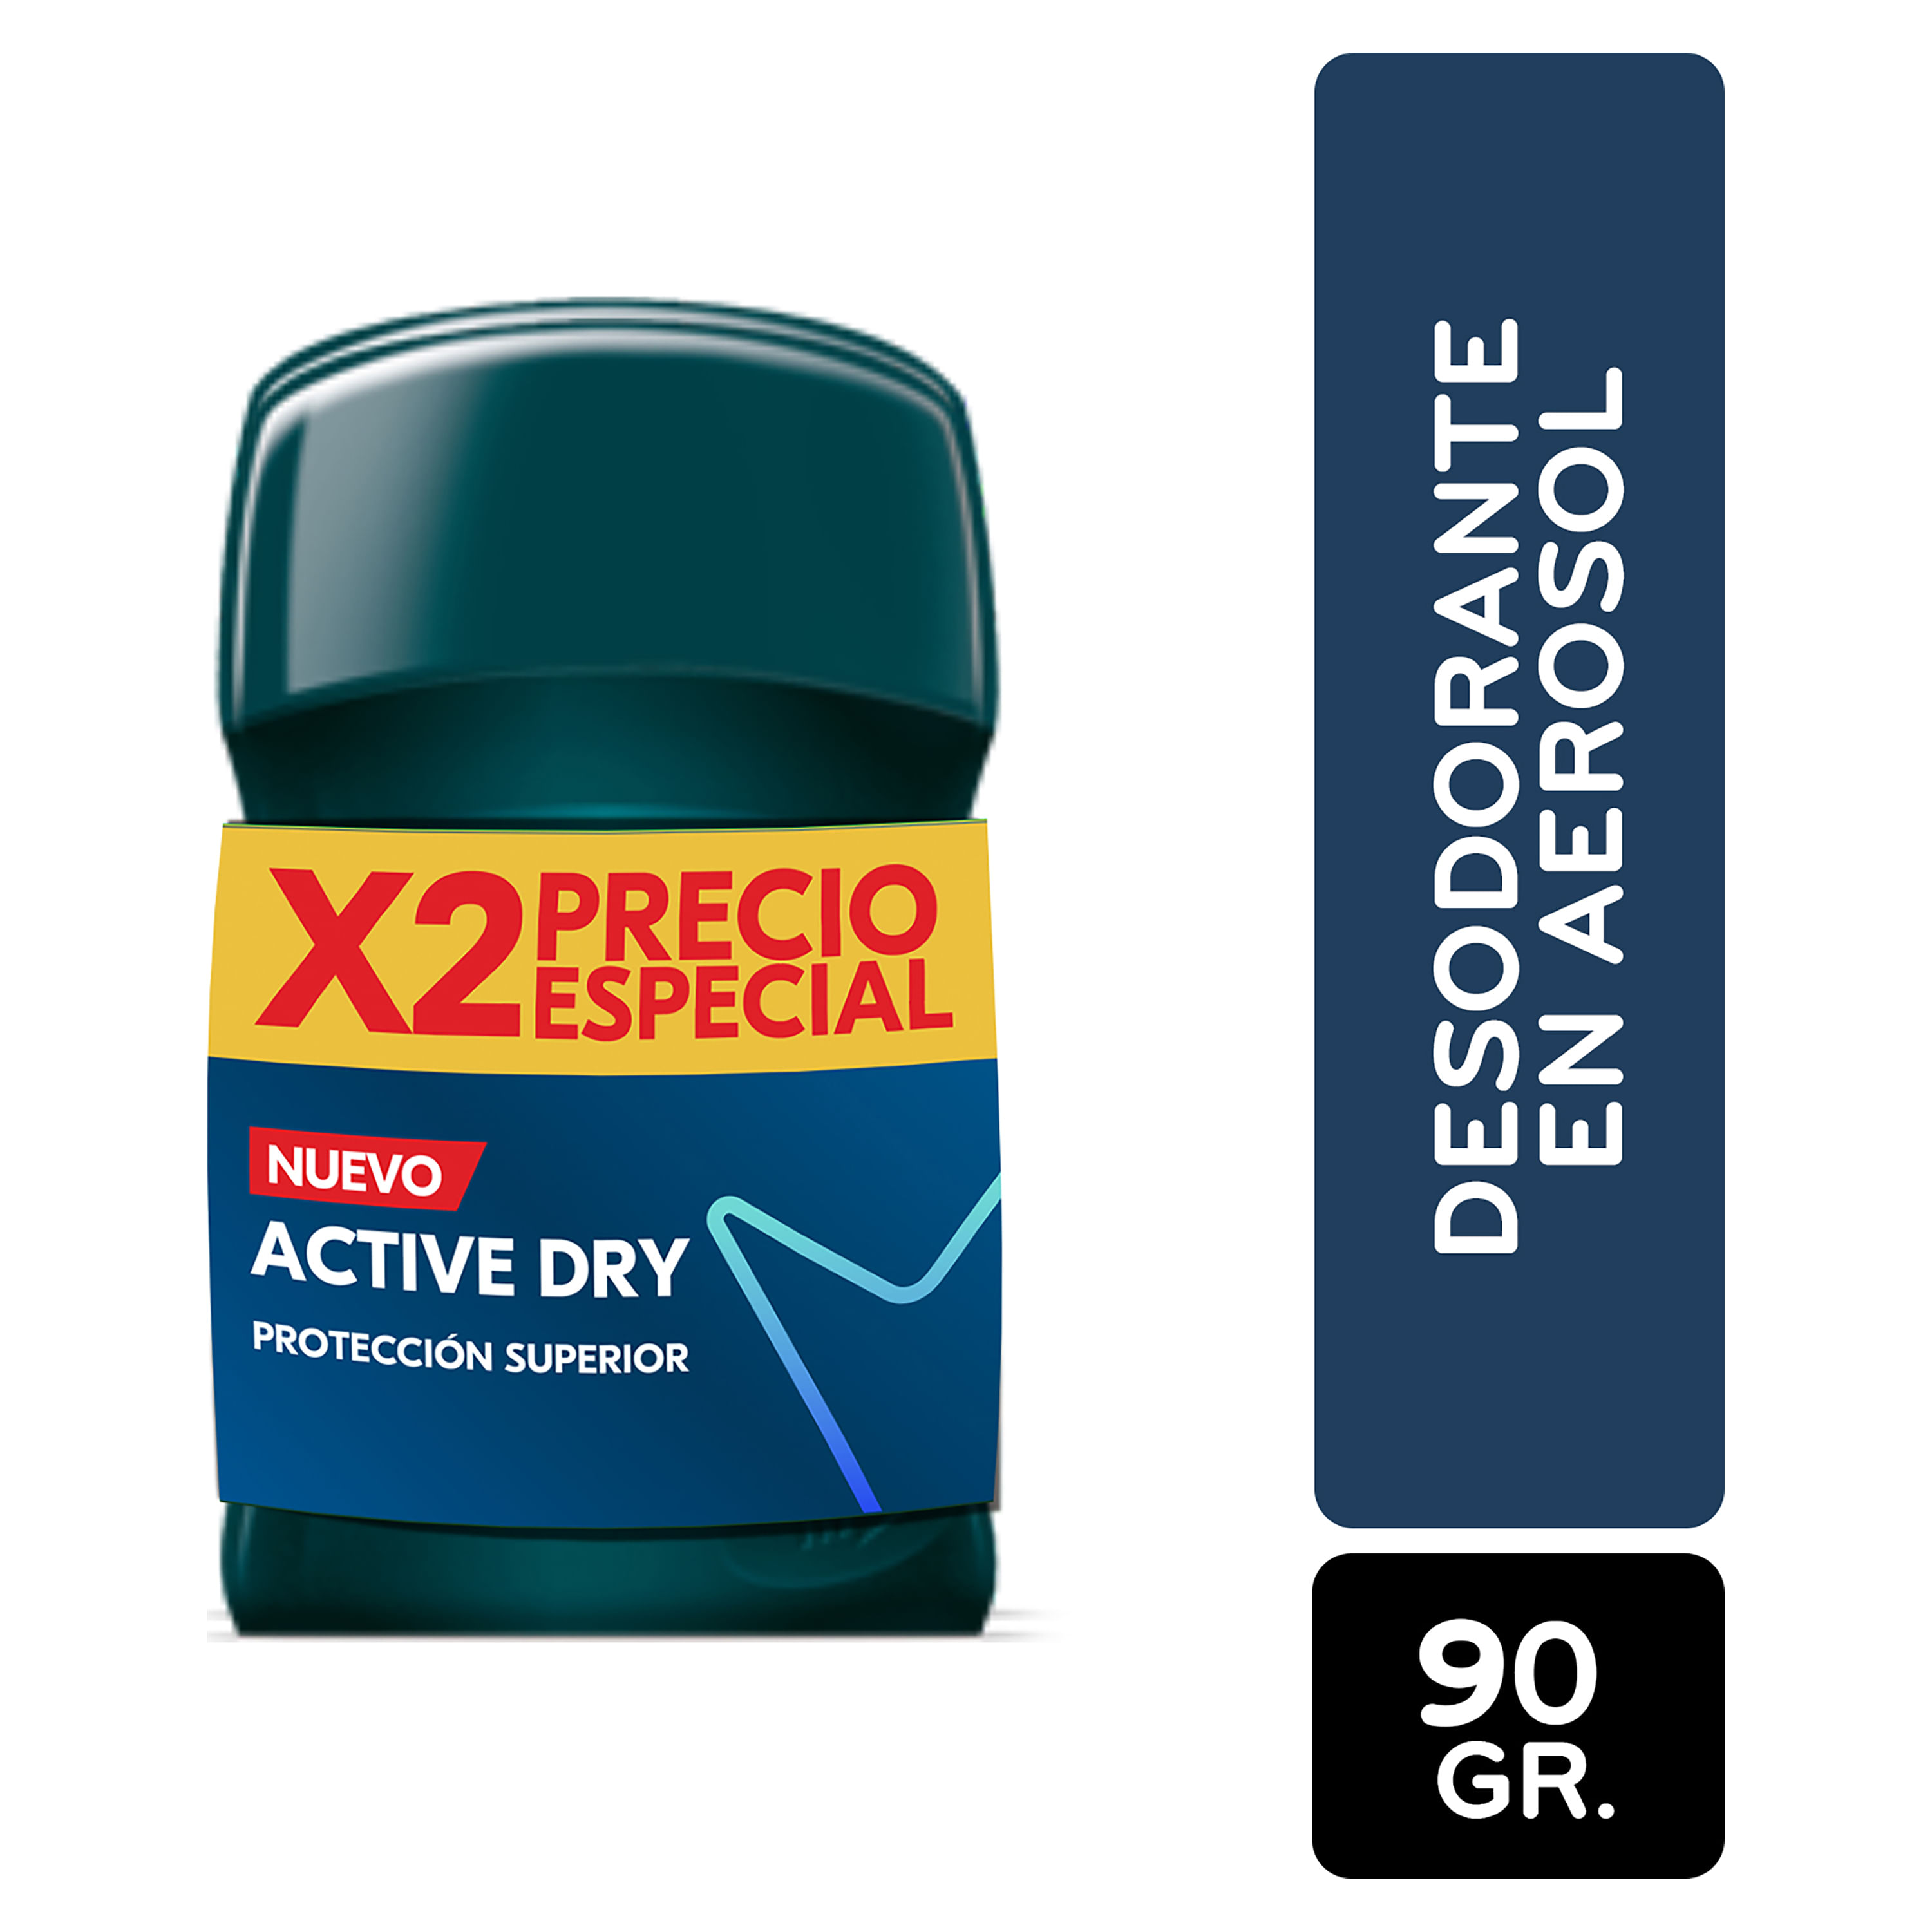 3-PcsPack Rexona Algodão Dry Stick Antiperspirante Desodorante